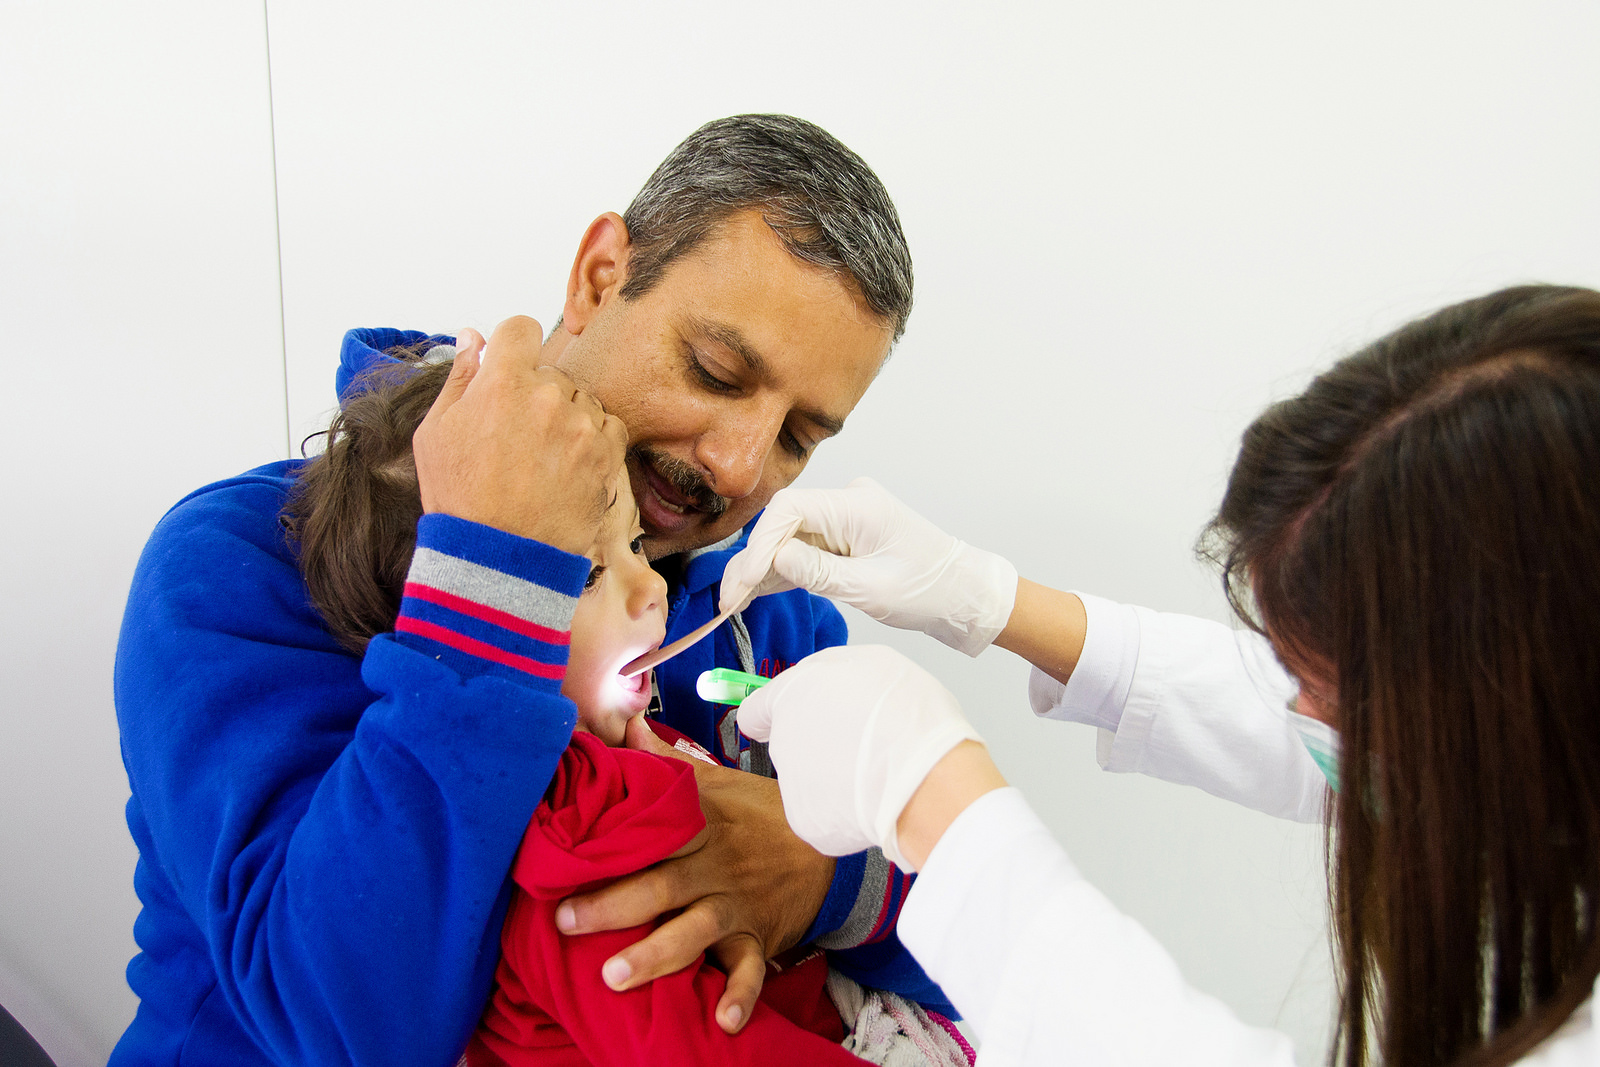 Dr. Sandra Mrdja examines a sick Syrian child at the Vasariste refugee aid point in Kanjiza.